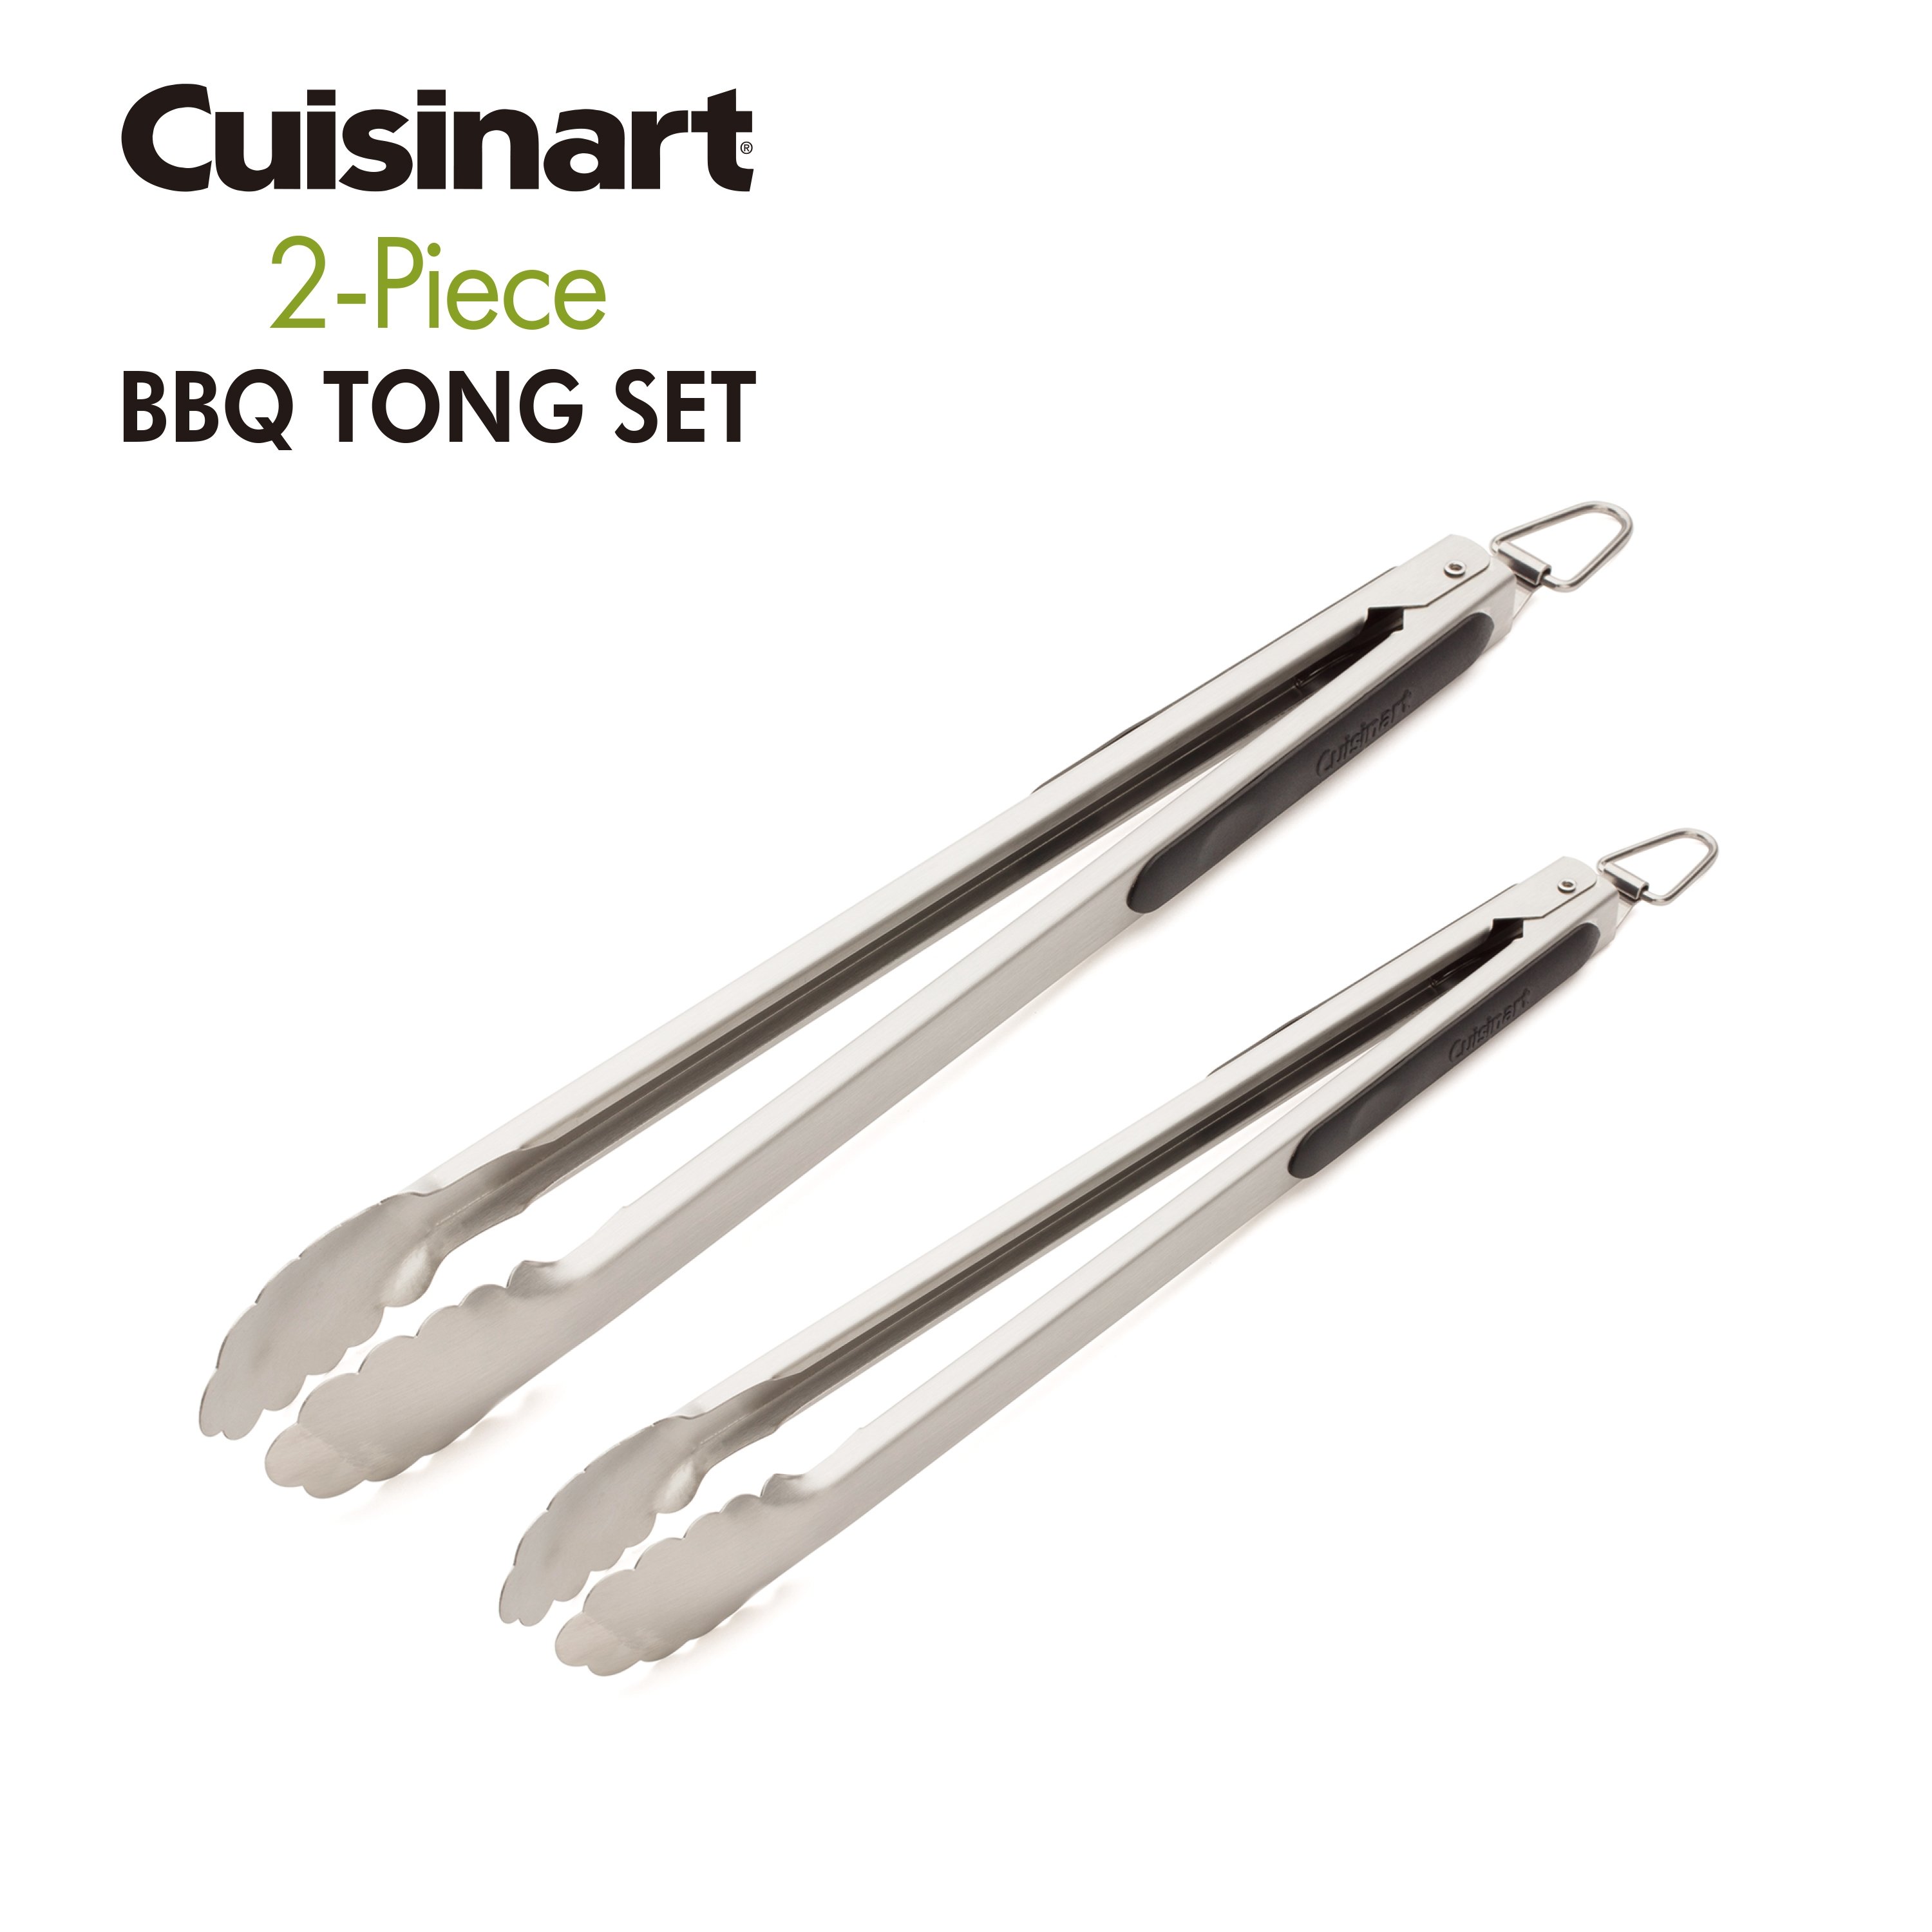 Cuisinart CGS-8036 Backyard BBQ Tool Set, 36-Piece